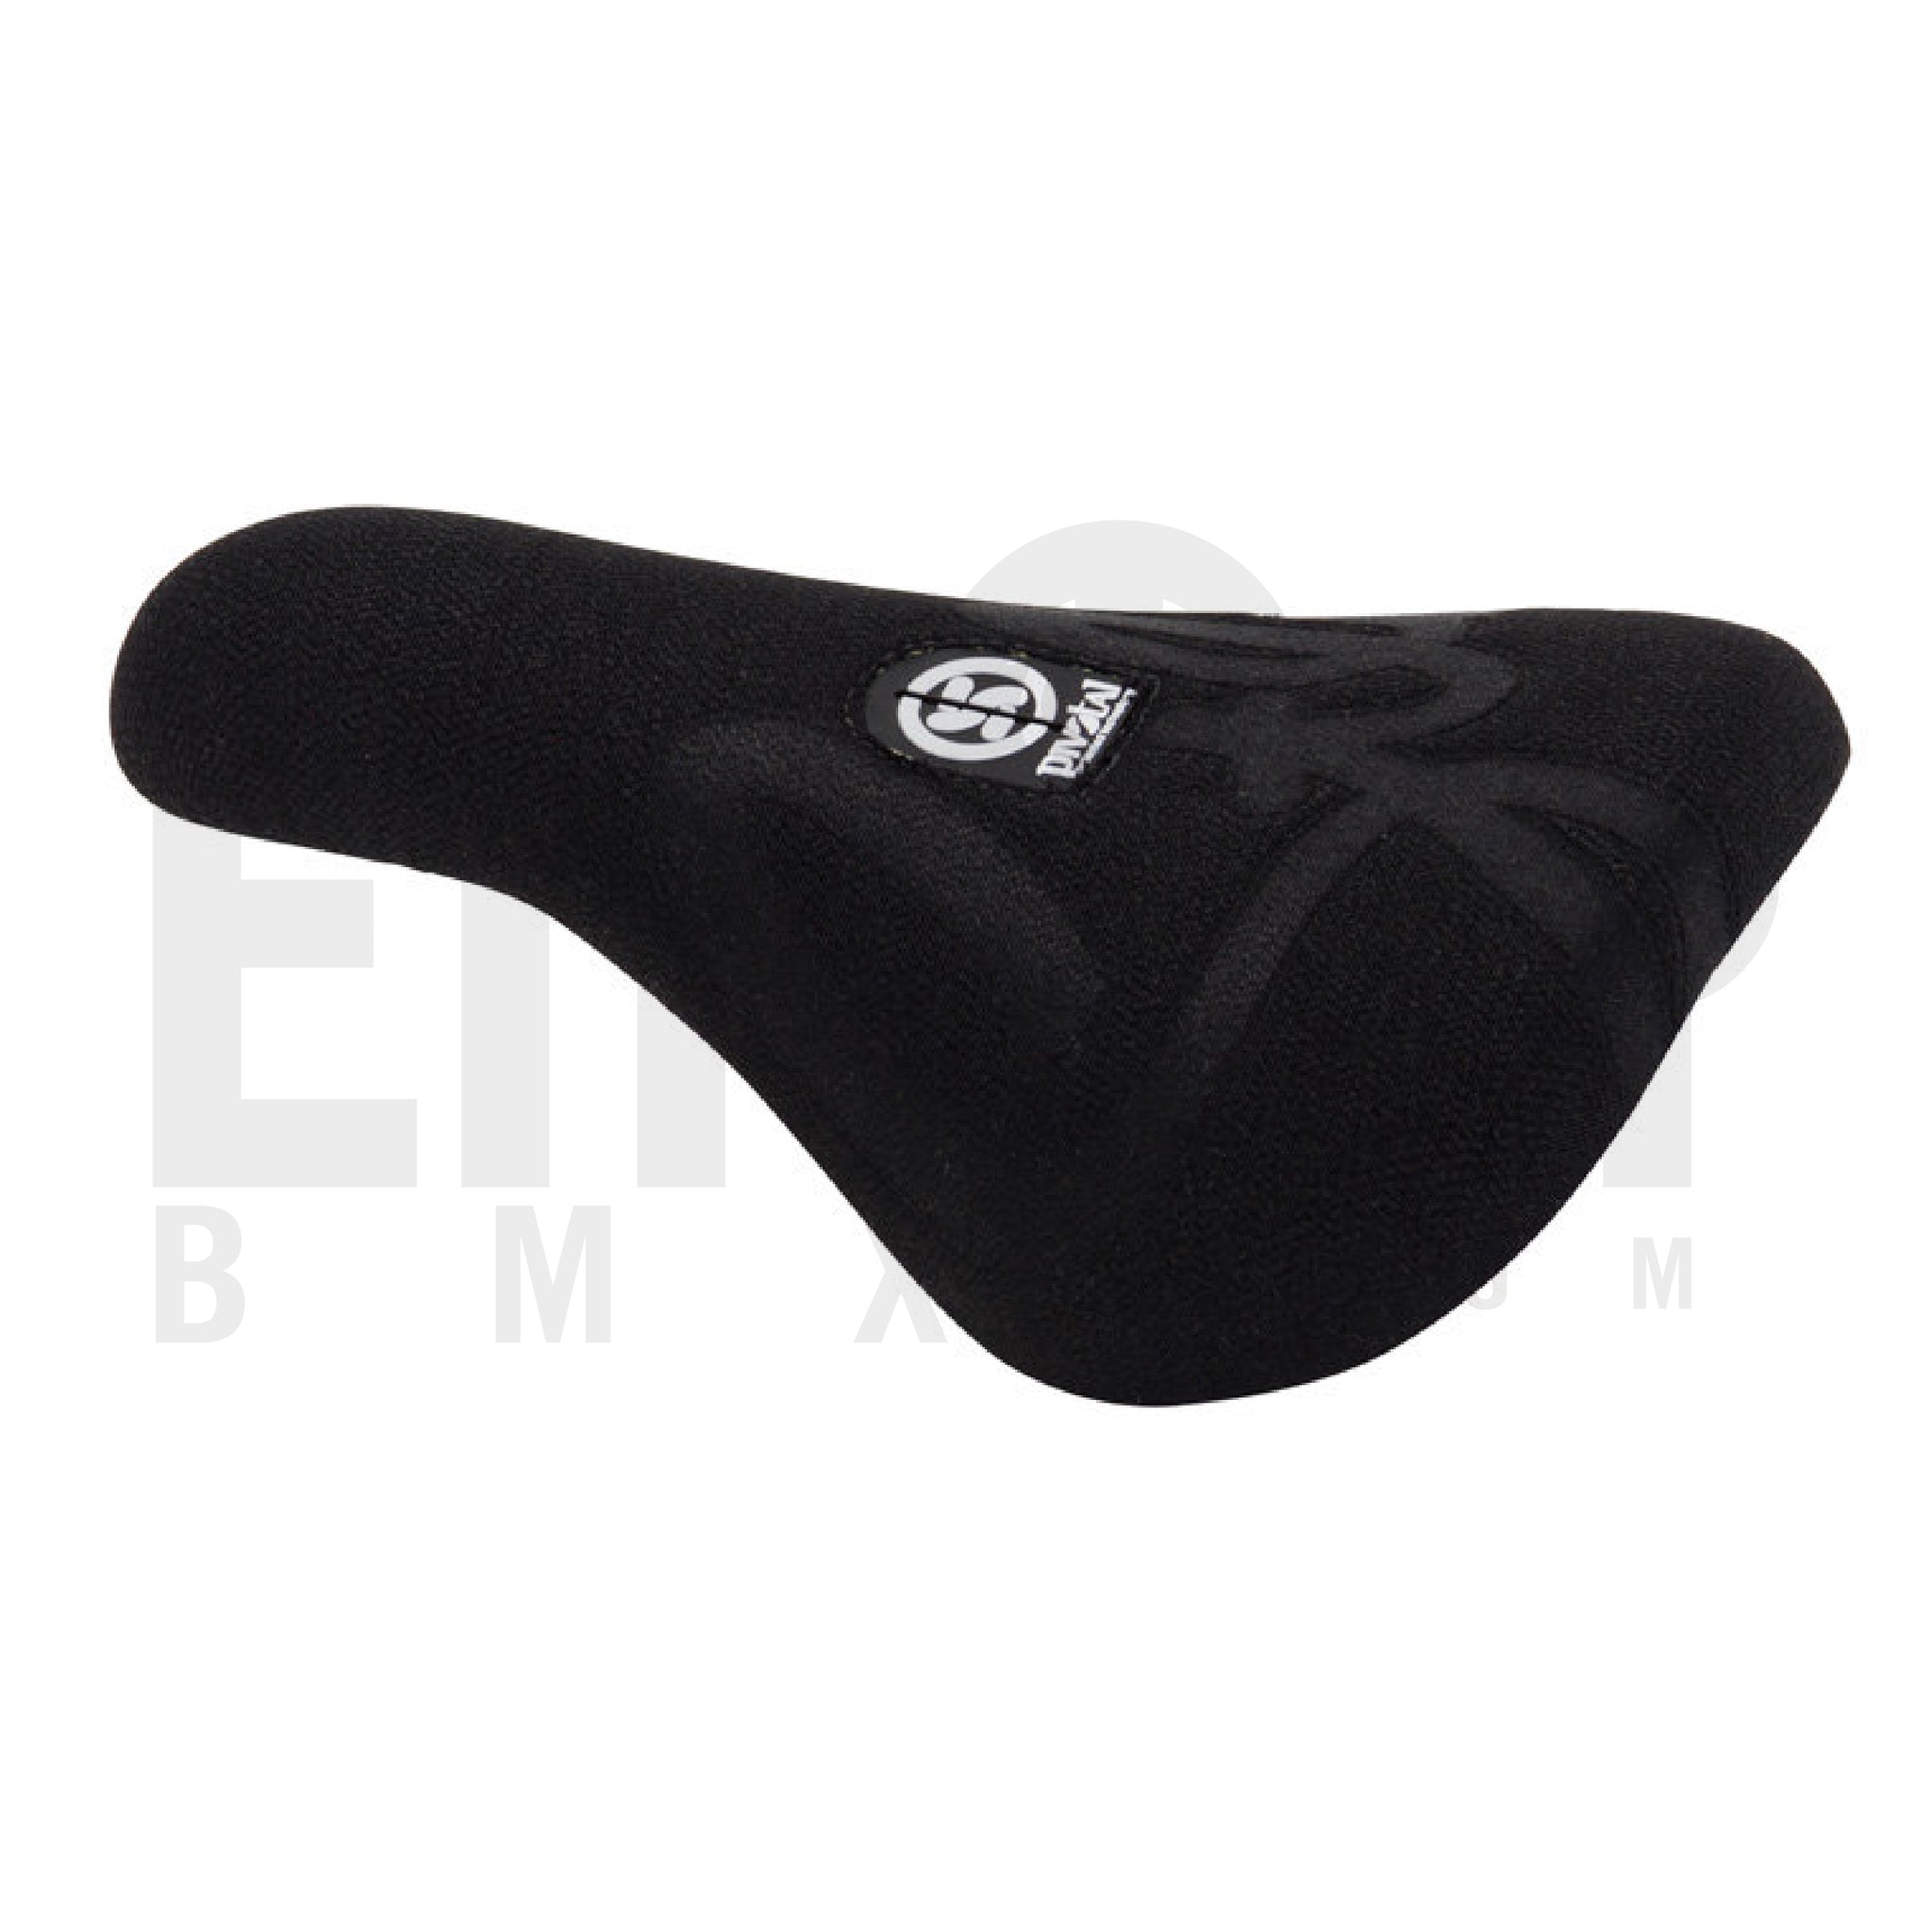 Stolen Brand F-Boss Mid Sized BMX Pivotal Seat / Black